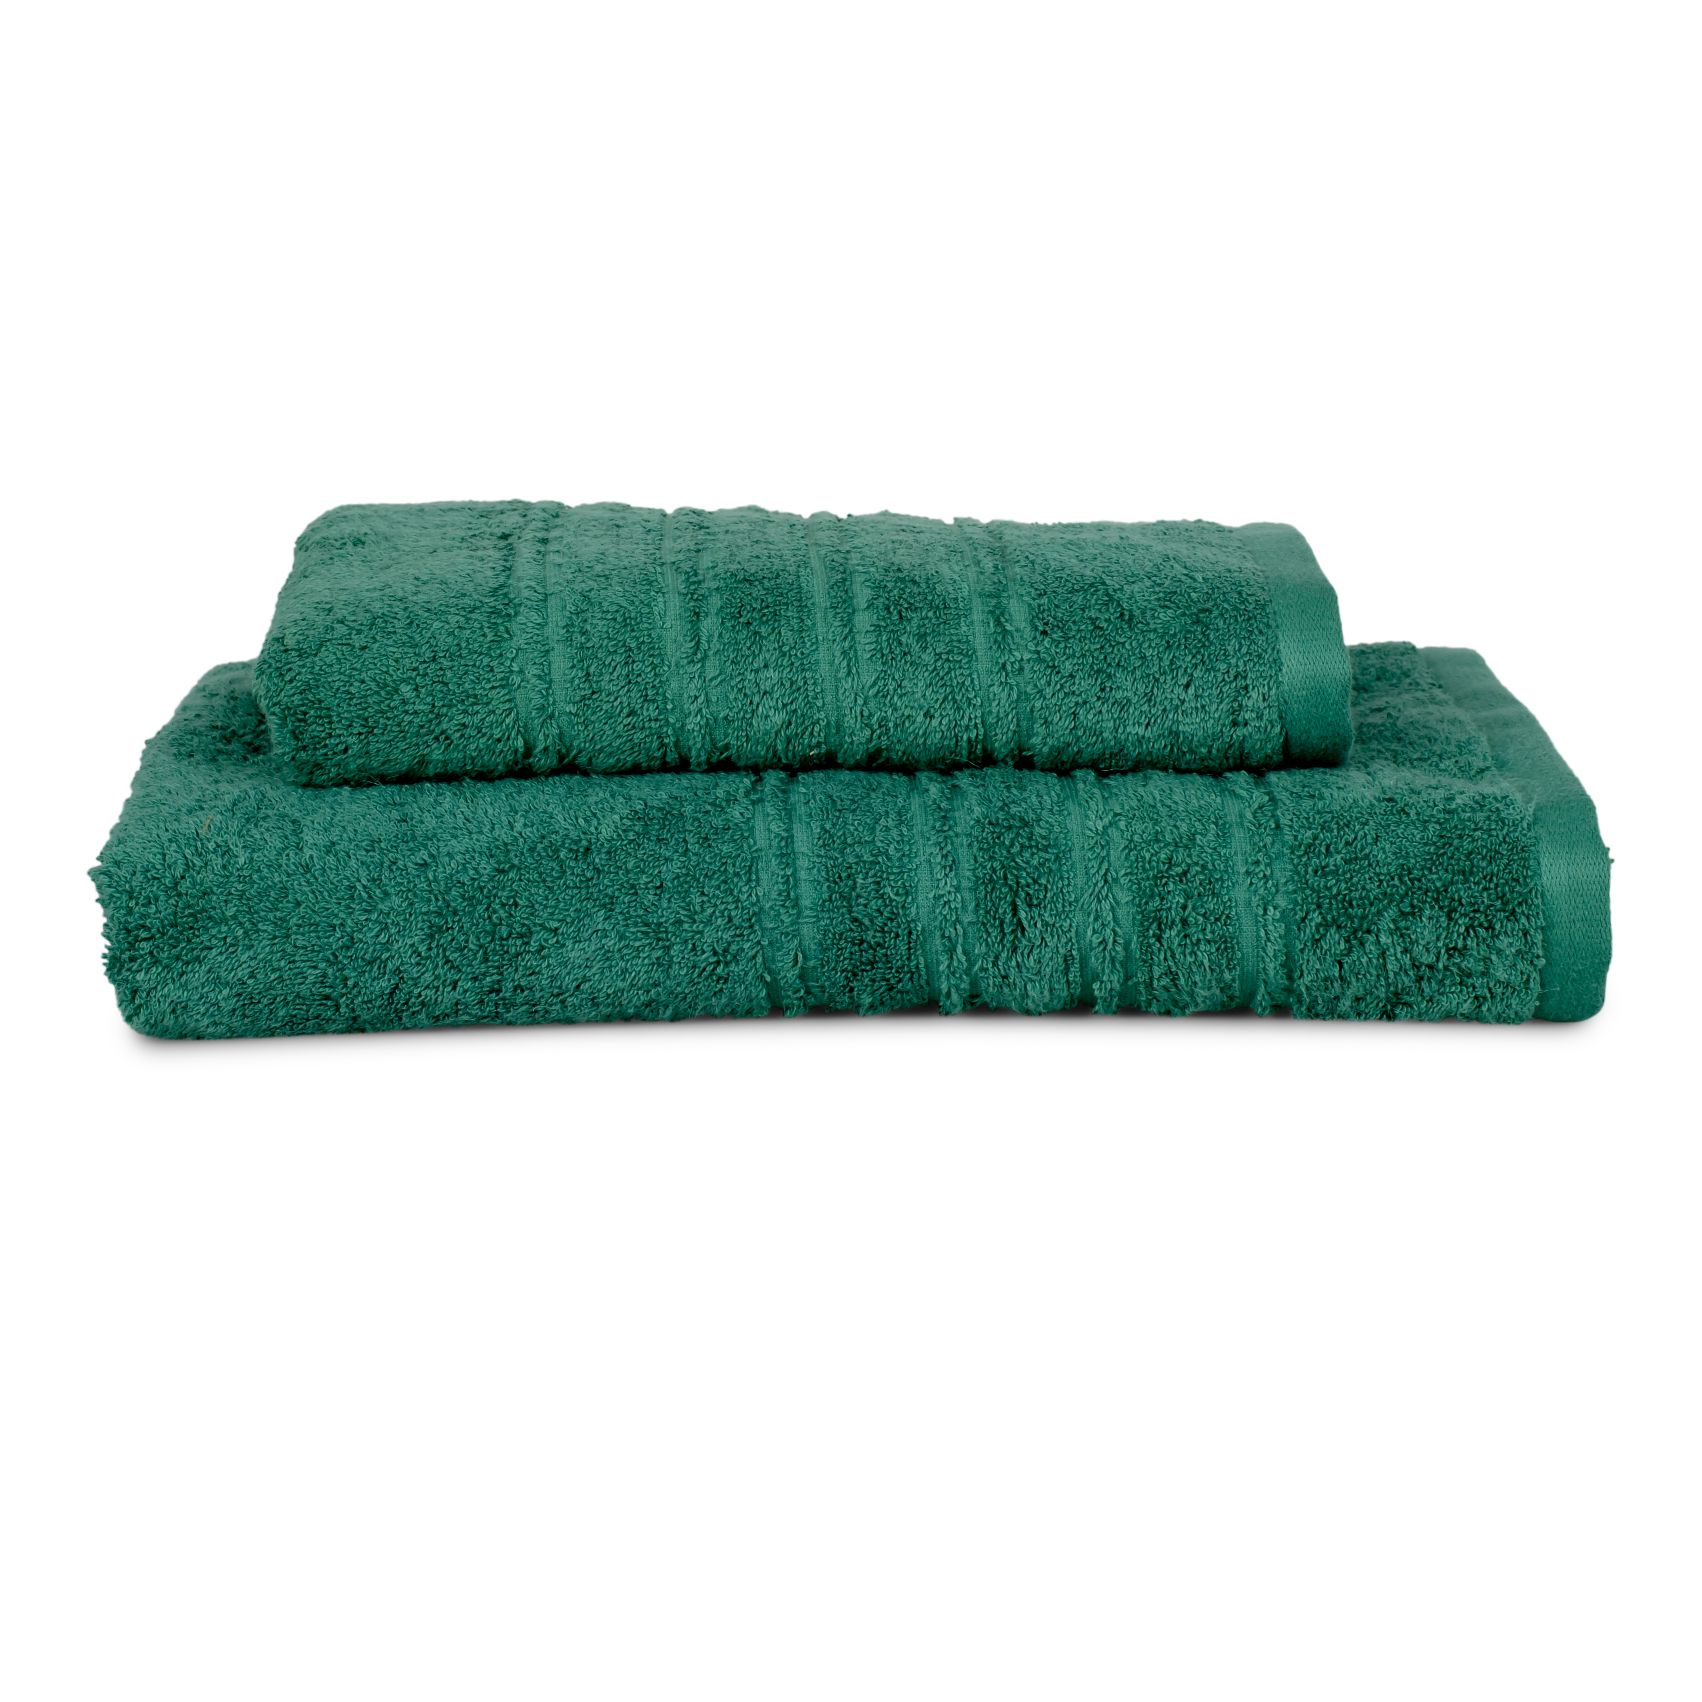  Nettle Håndklæde, Grøn, 70x140 cm